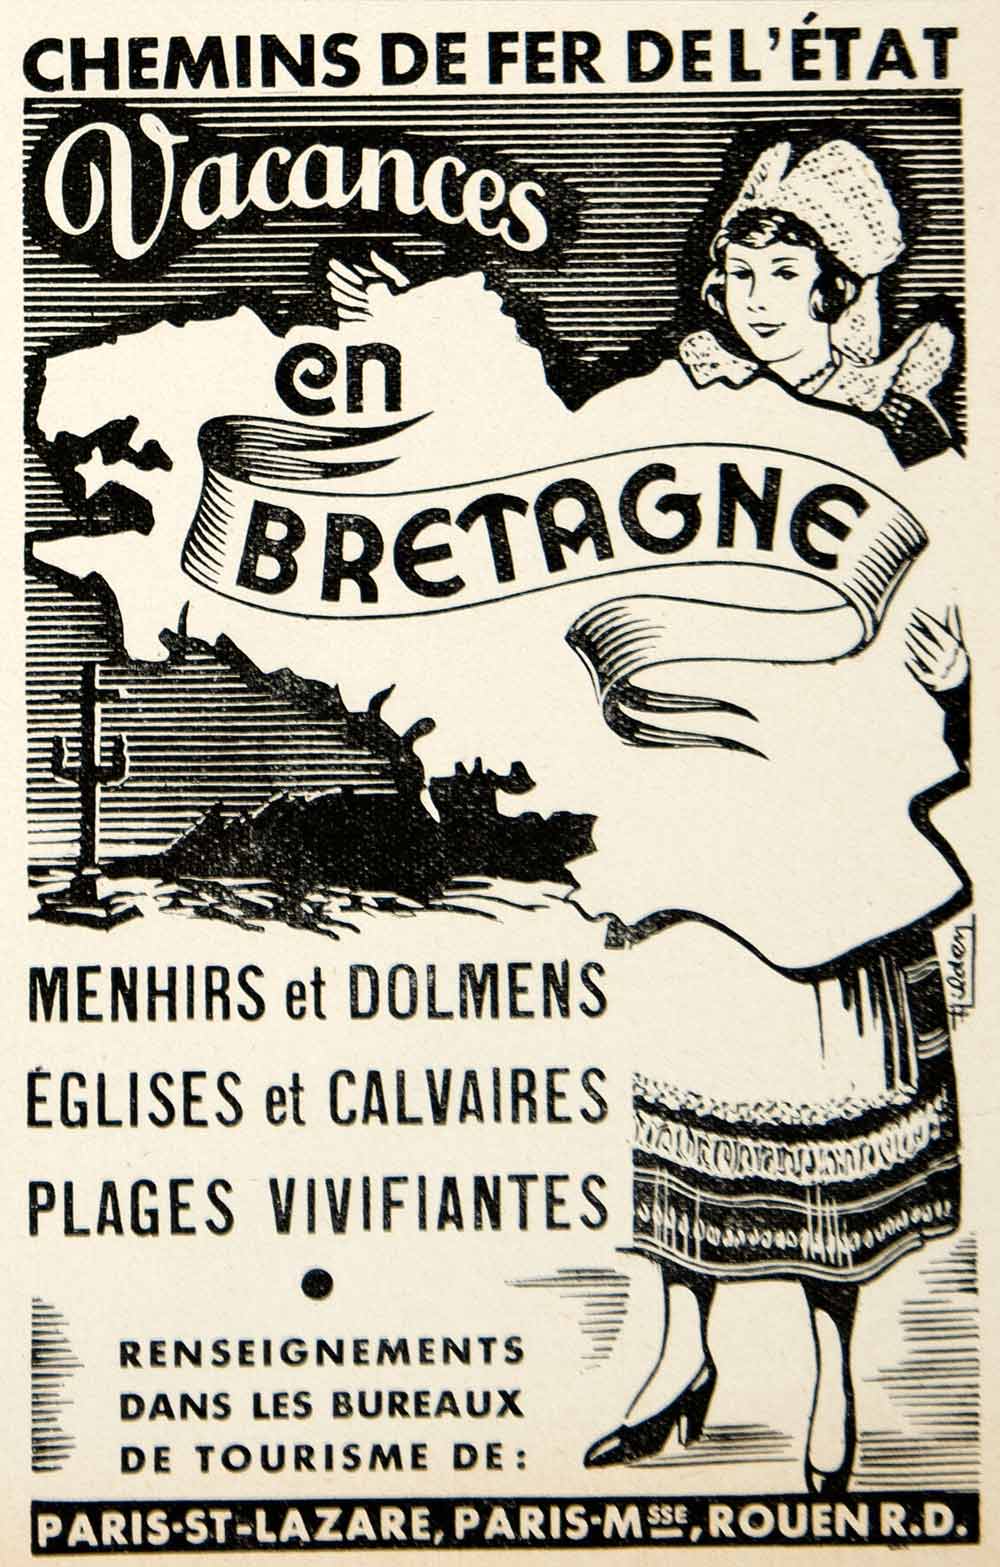 1937 Ad French Train Rail Travel Chemins de fer de l'Etat Brittany Costume VEN9